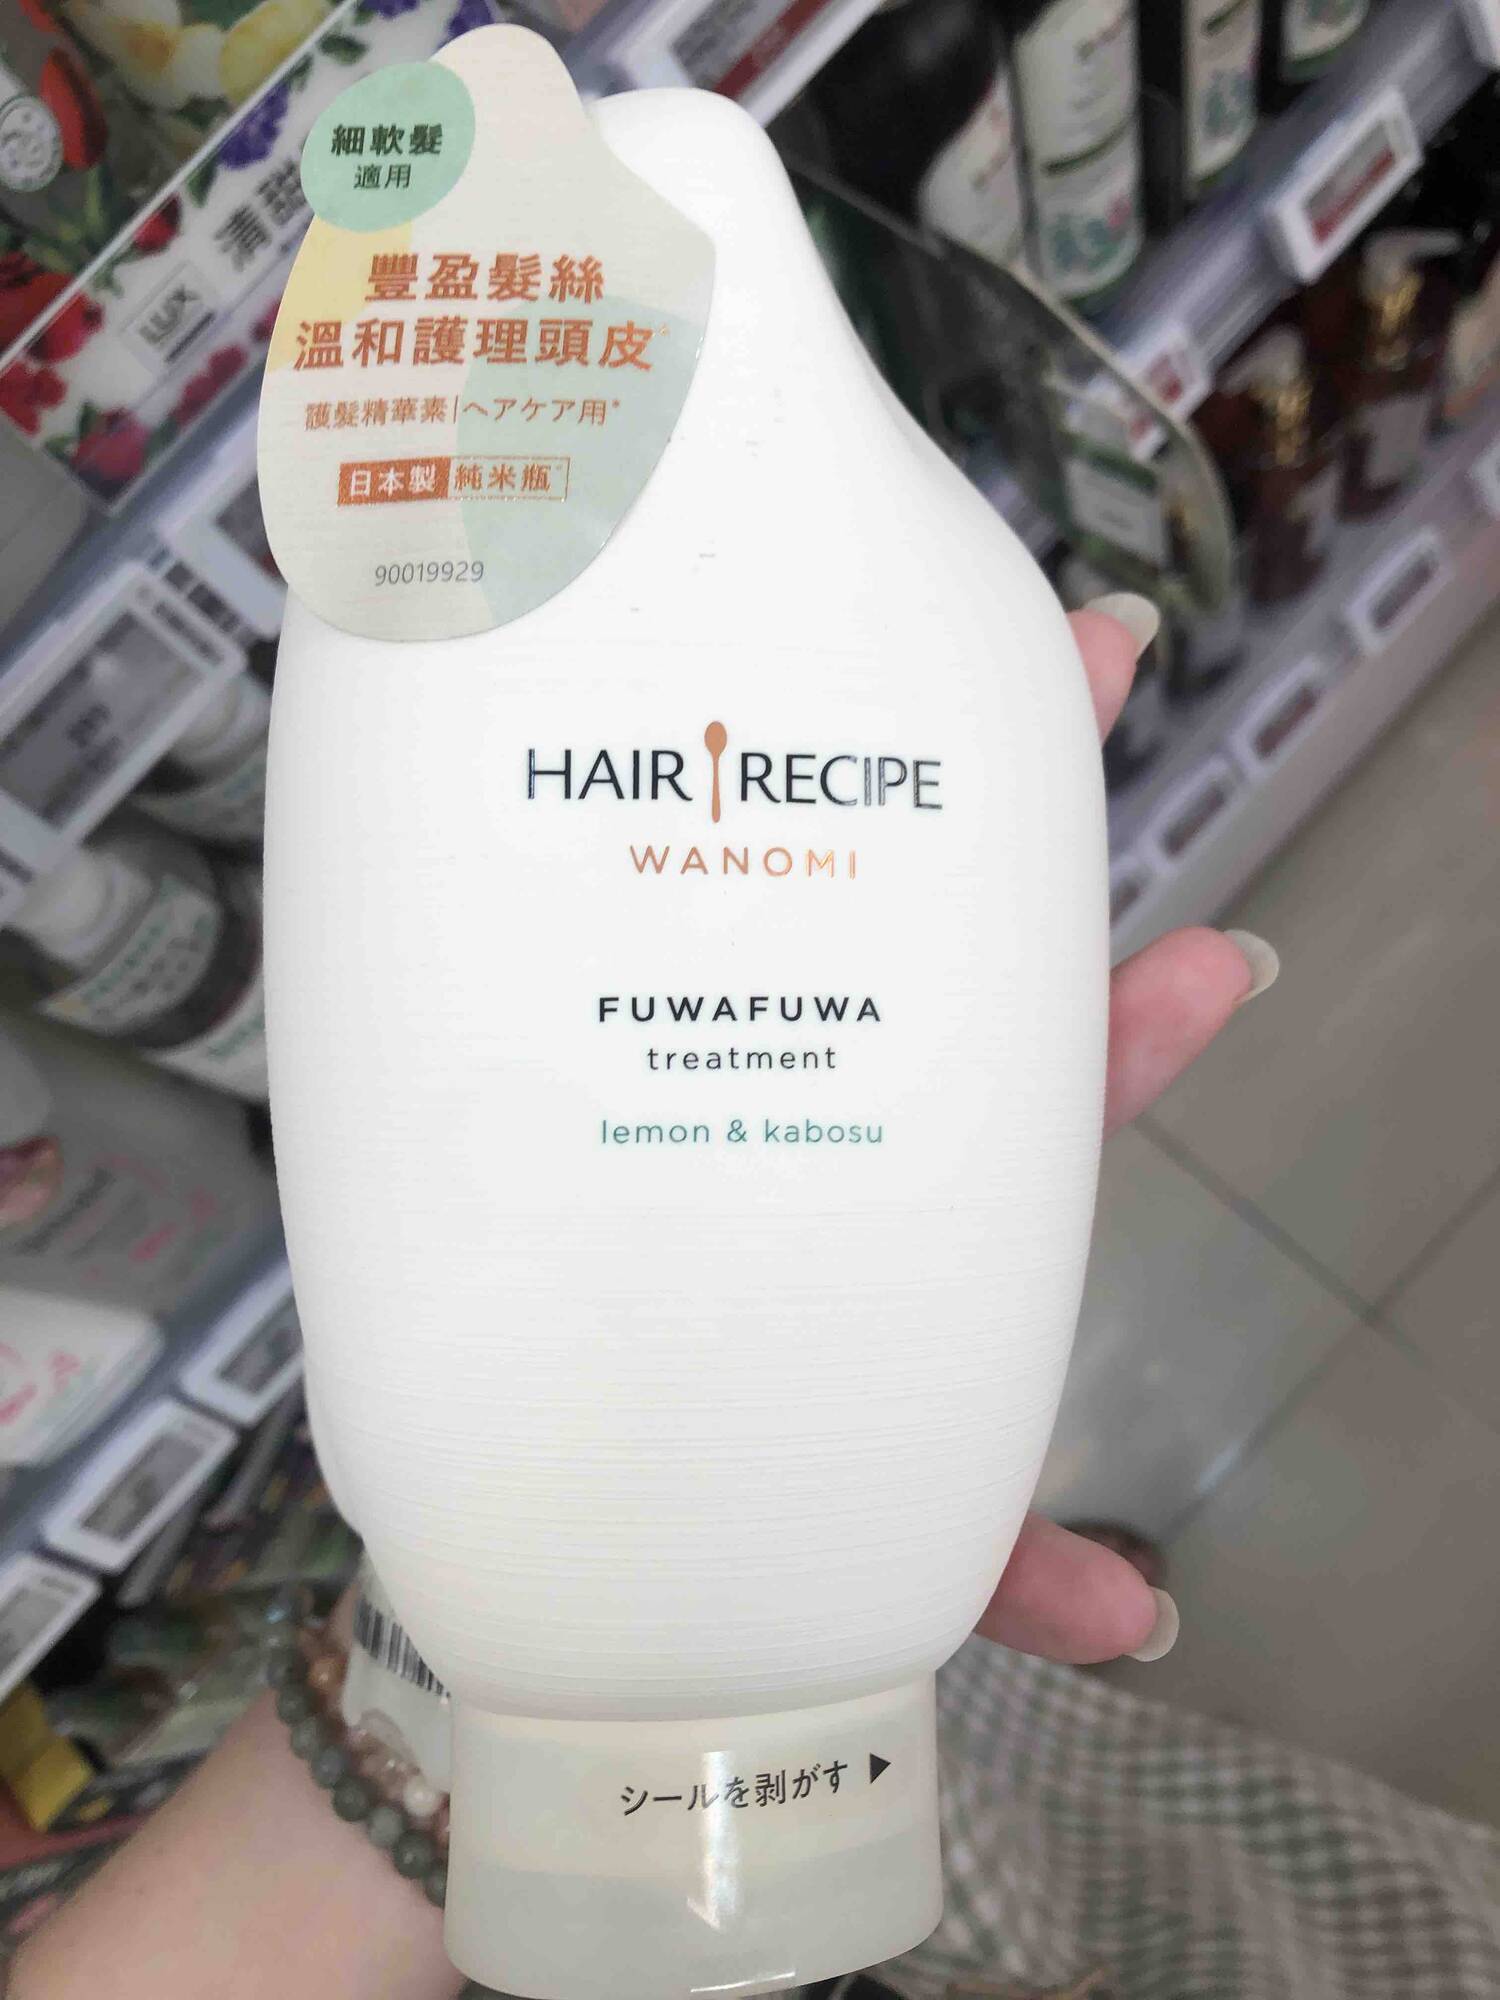 P&G - Hair & Recipe - Fuwafuwa treatment